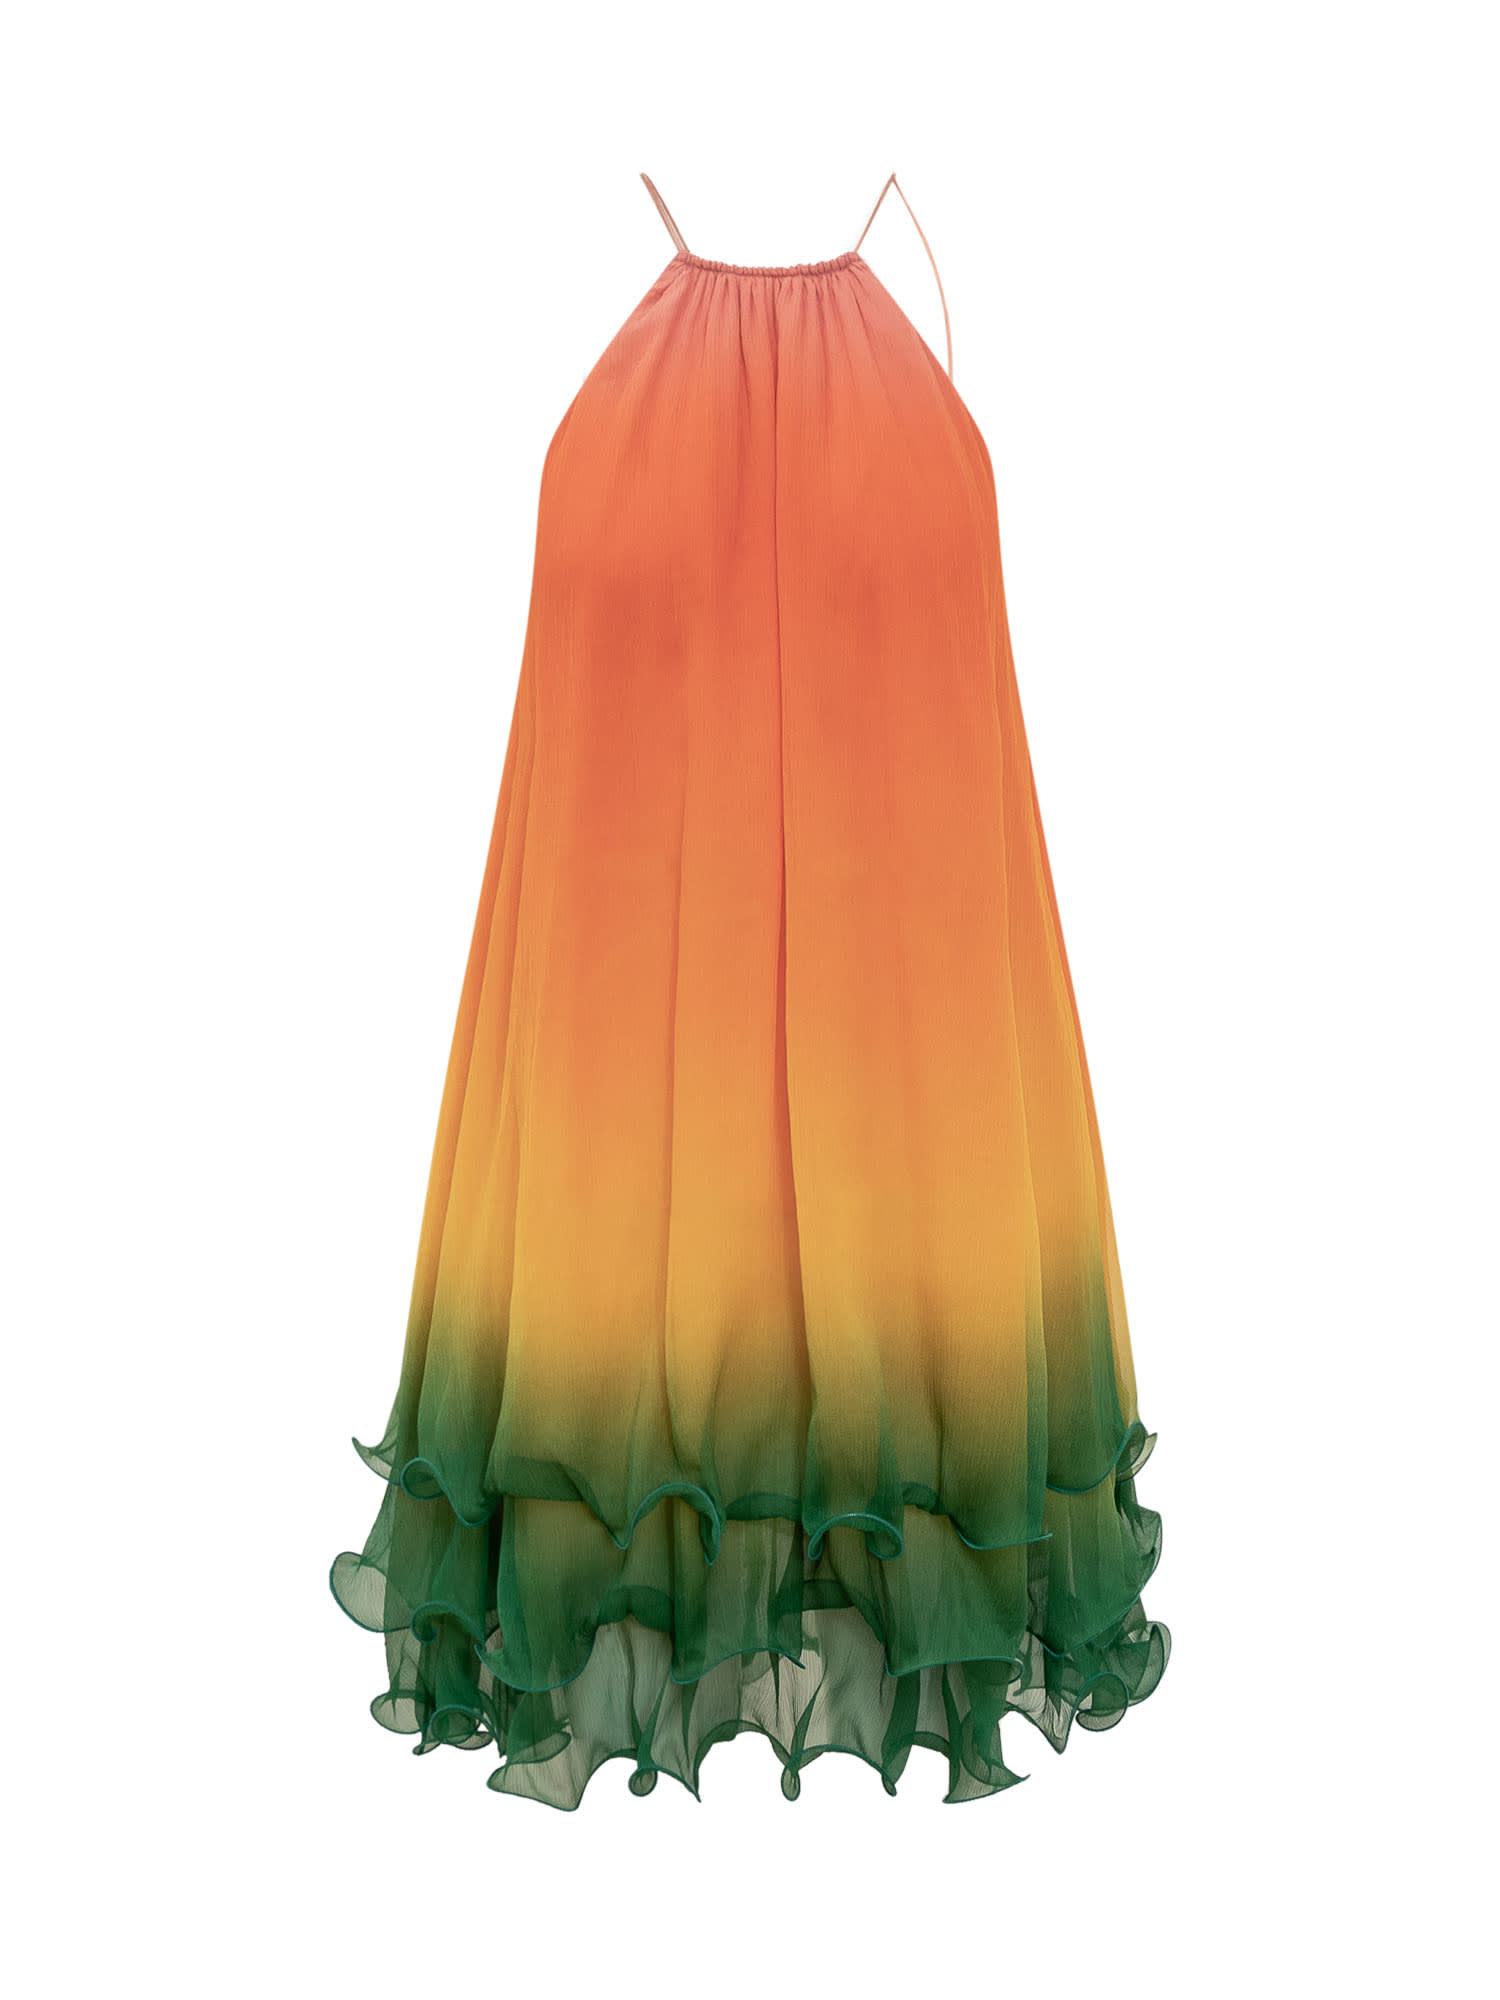 Silk Cocktail Dress